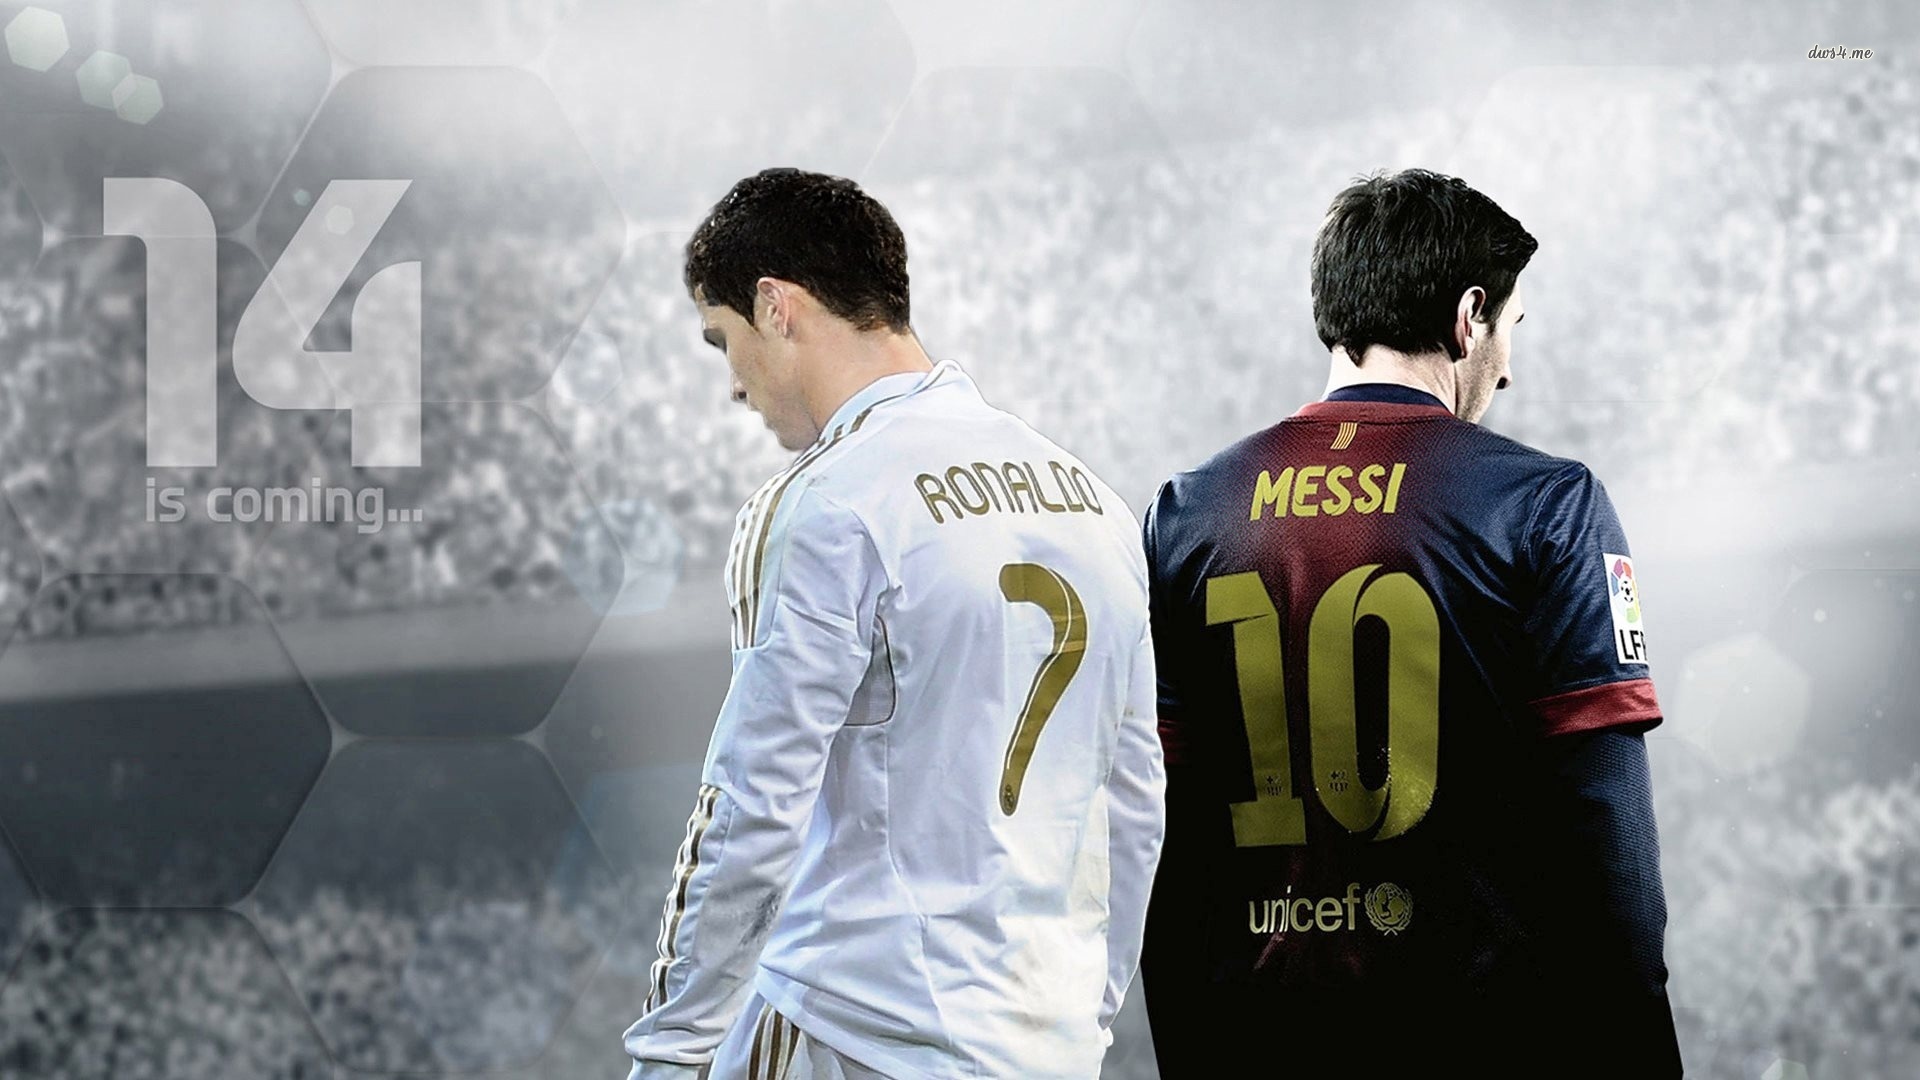 Messi Wallpaper ronaldo